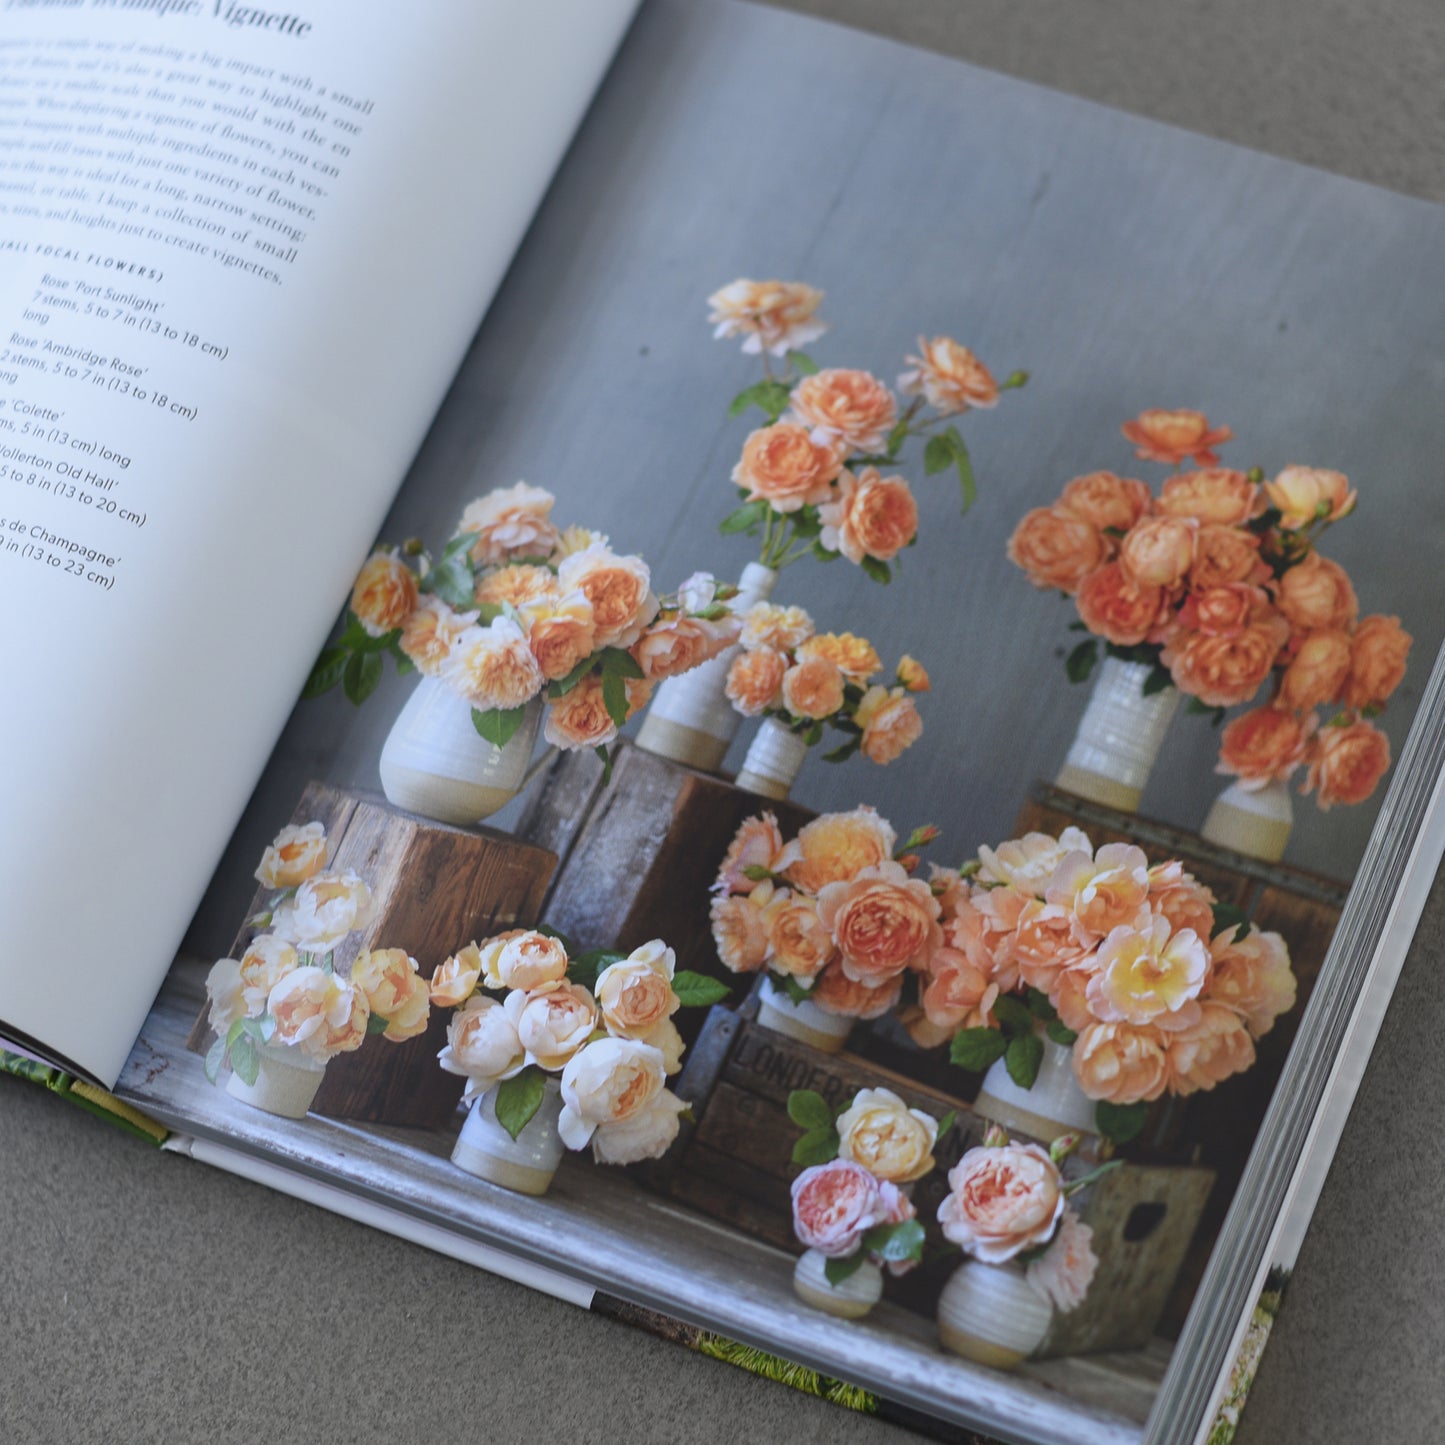 Floret Farm’s A Year in Flowers - Erin Benzakein